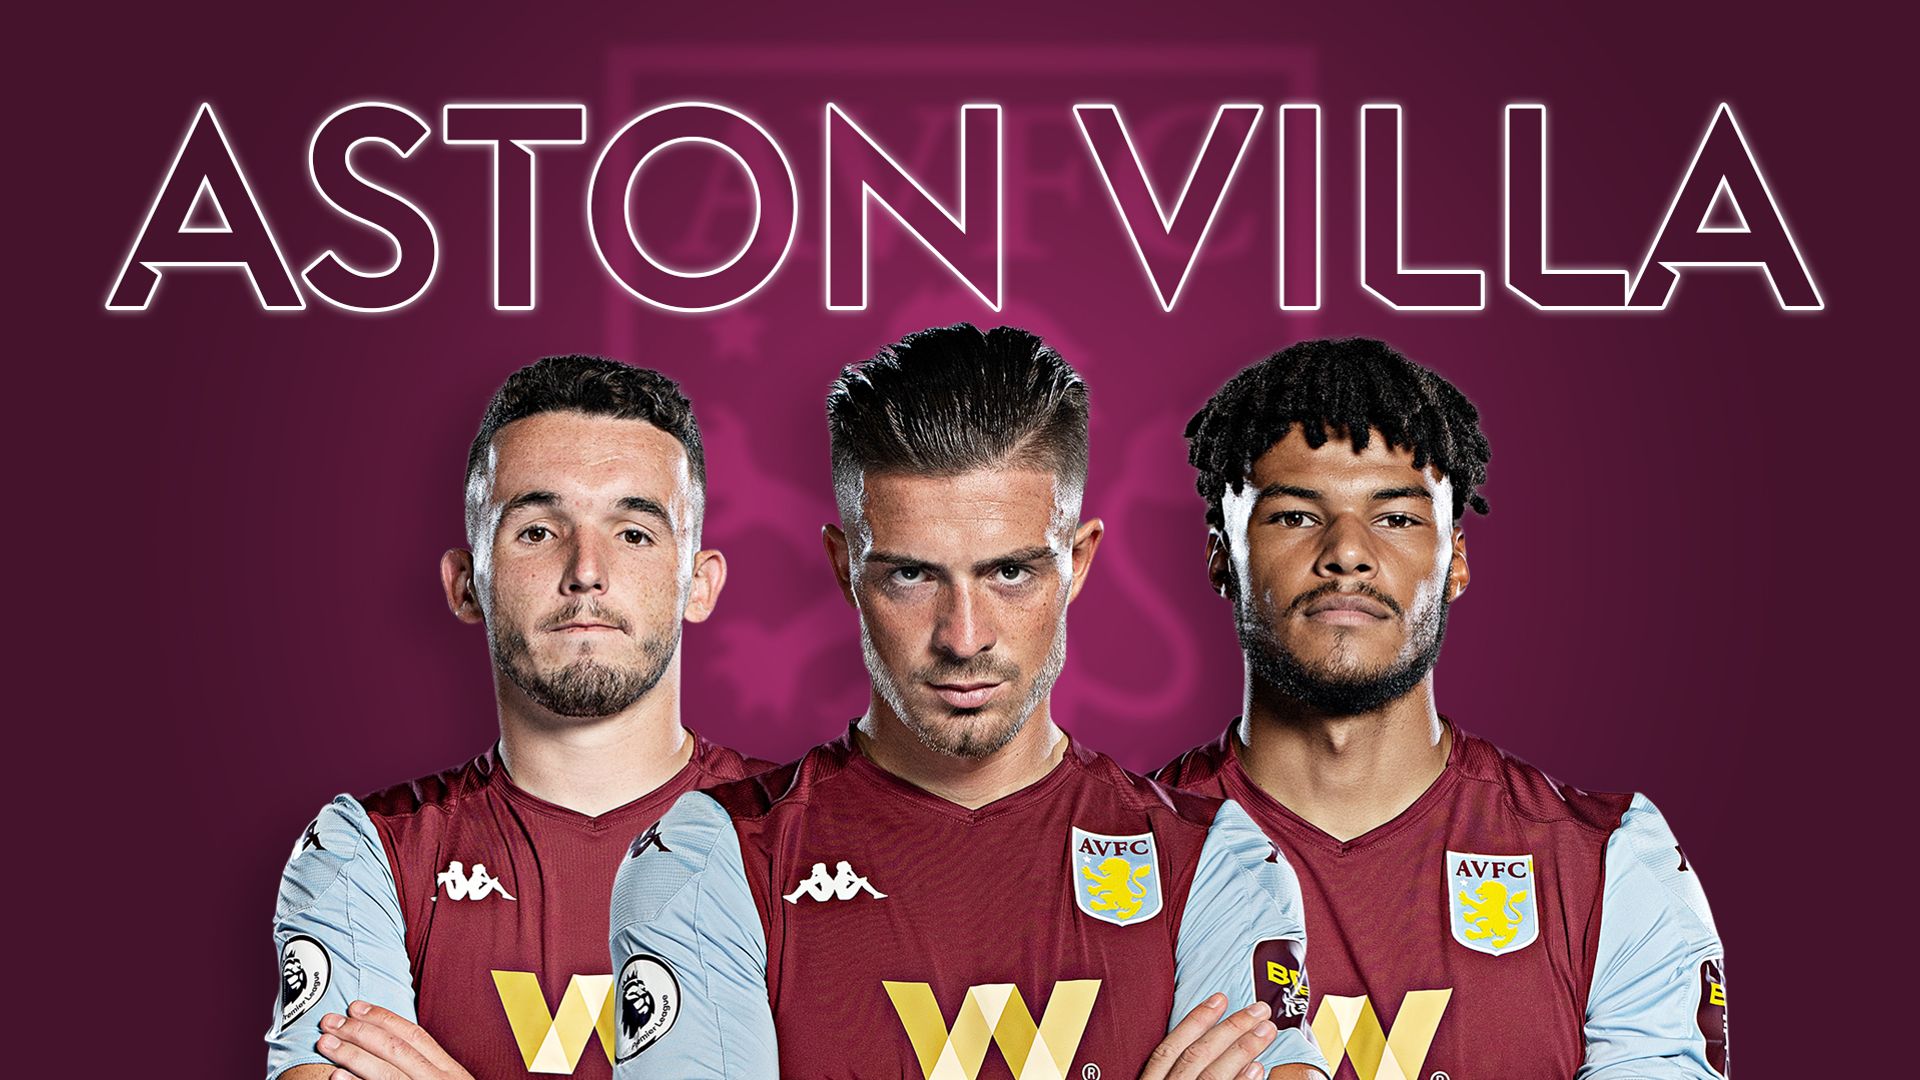 Aston Villa 2020/21: A season to consolidate?